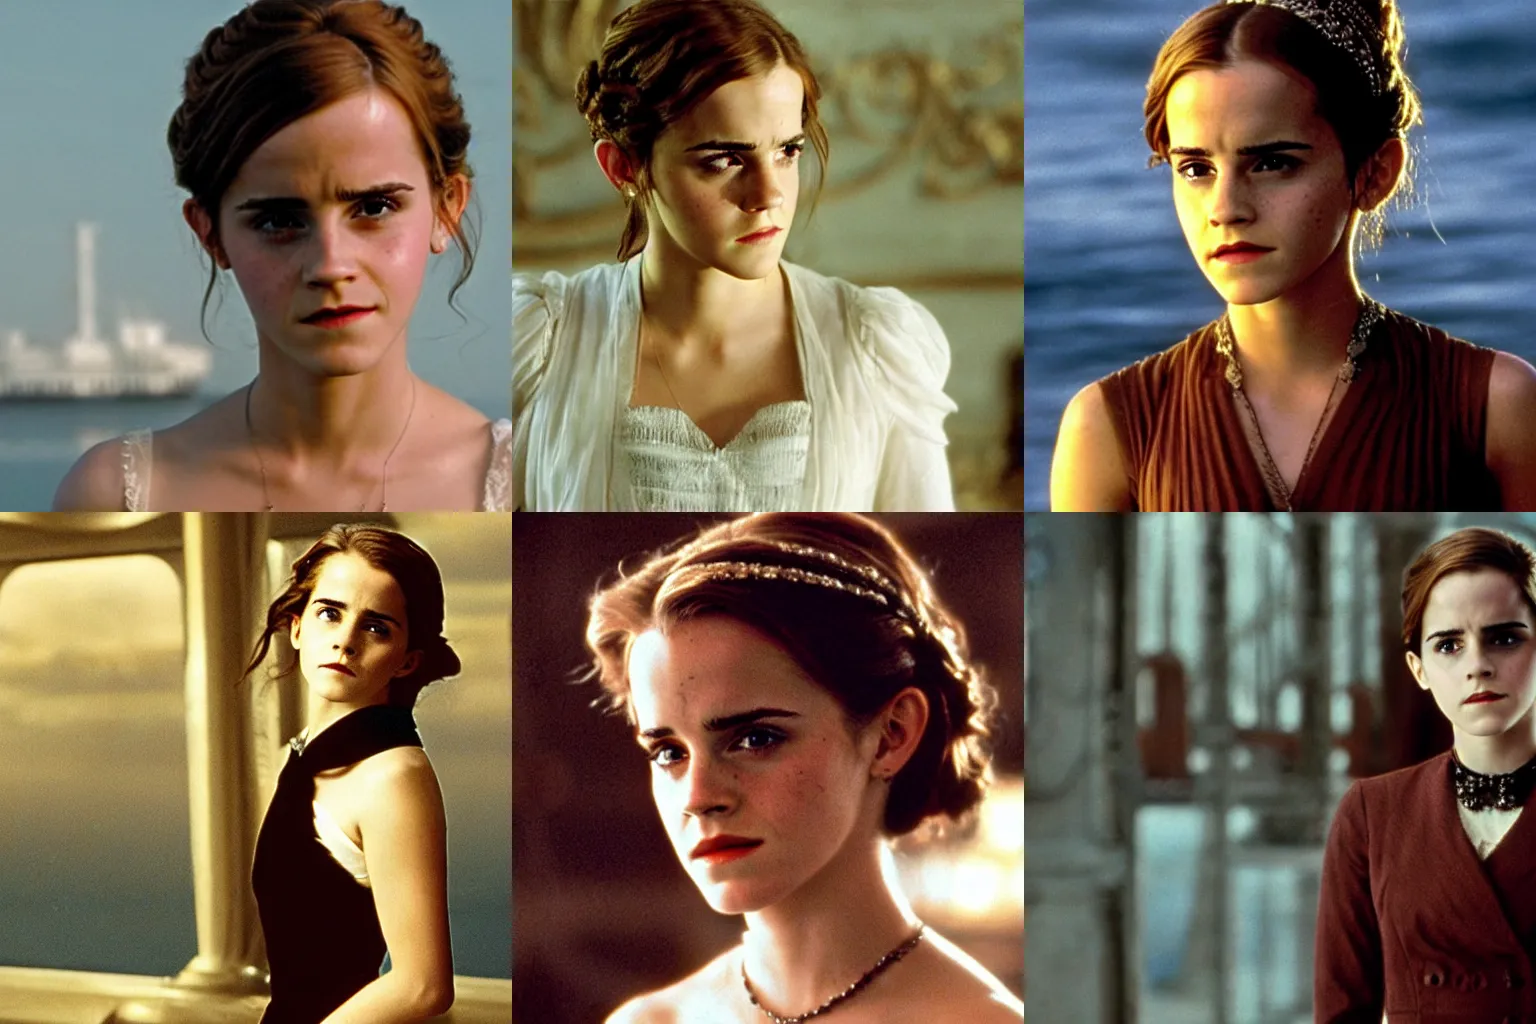 Prompt: Movie still of Emma Watson in Titanic